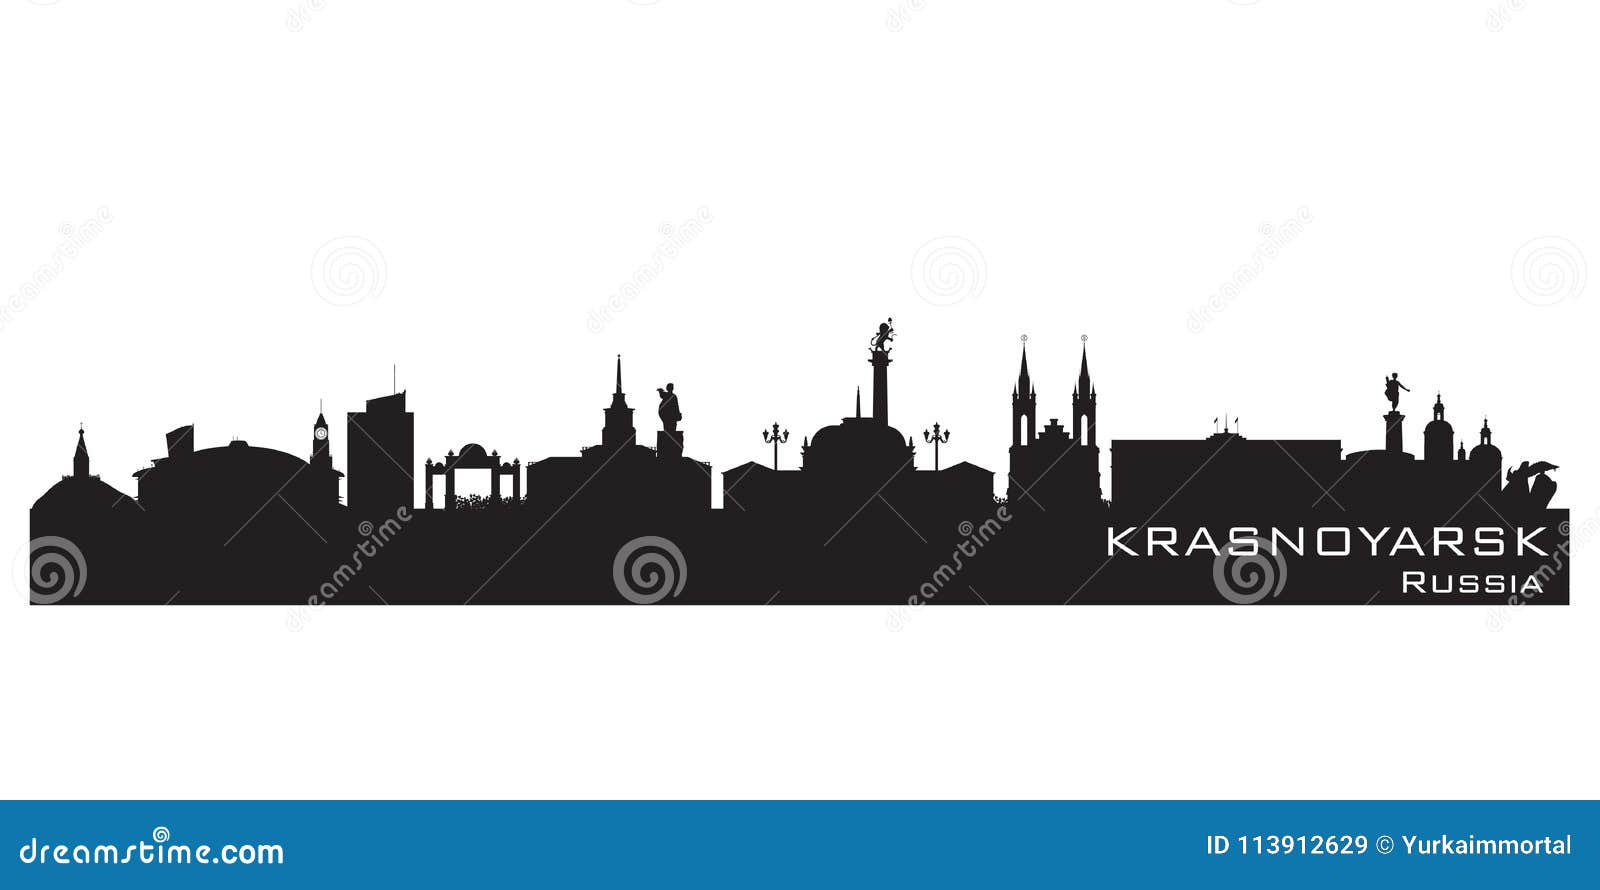 krasnoyarsk russia city skyline detailed silhouette